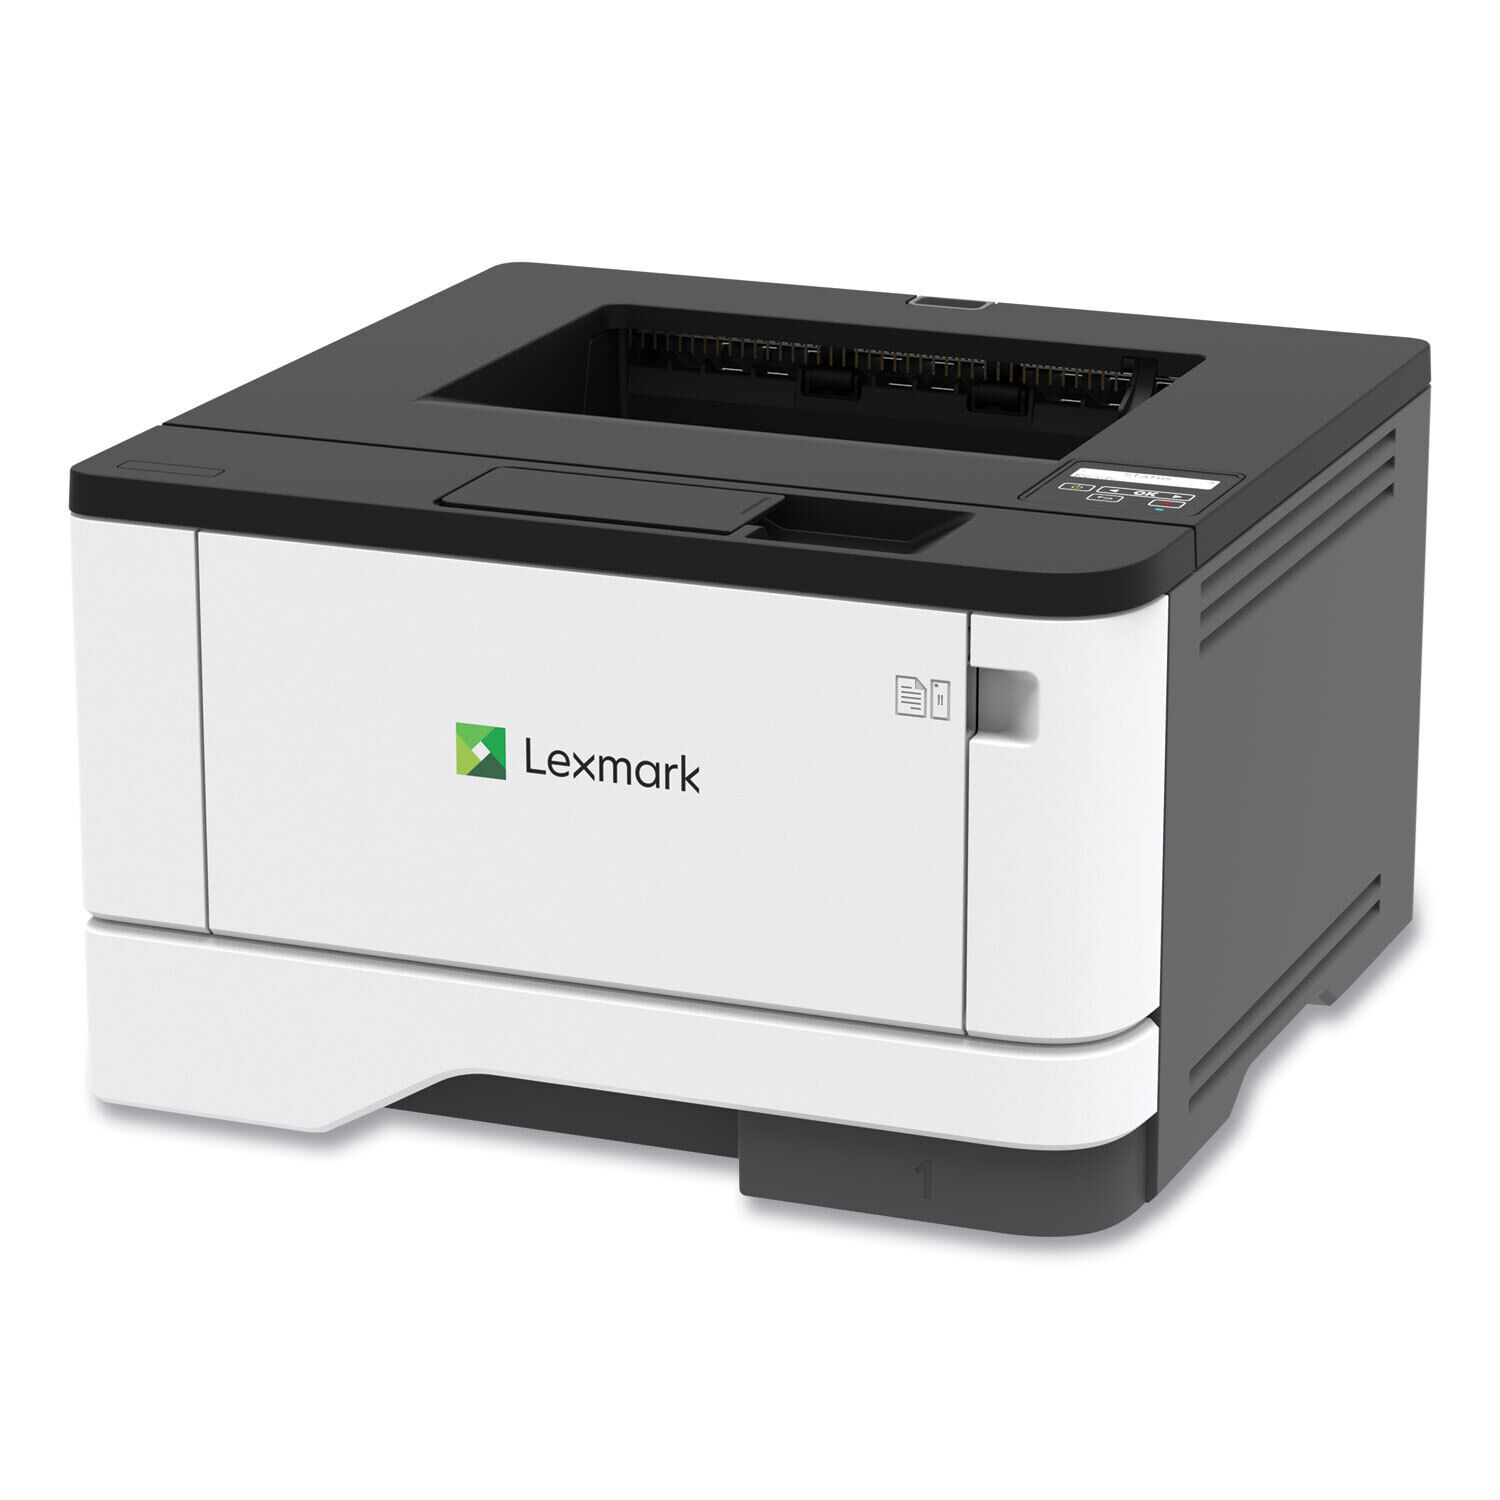 MS431dn Laser Printer 29S0050